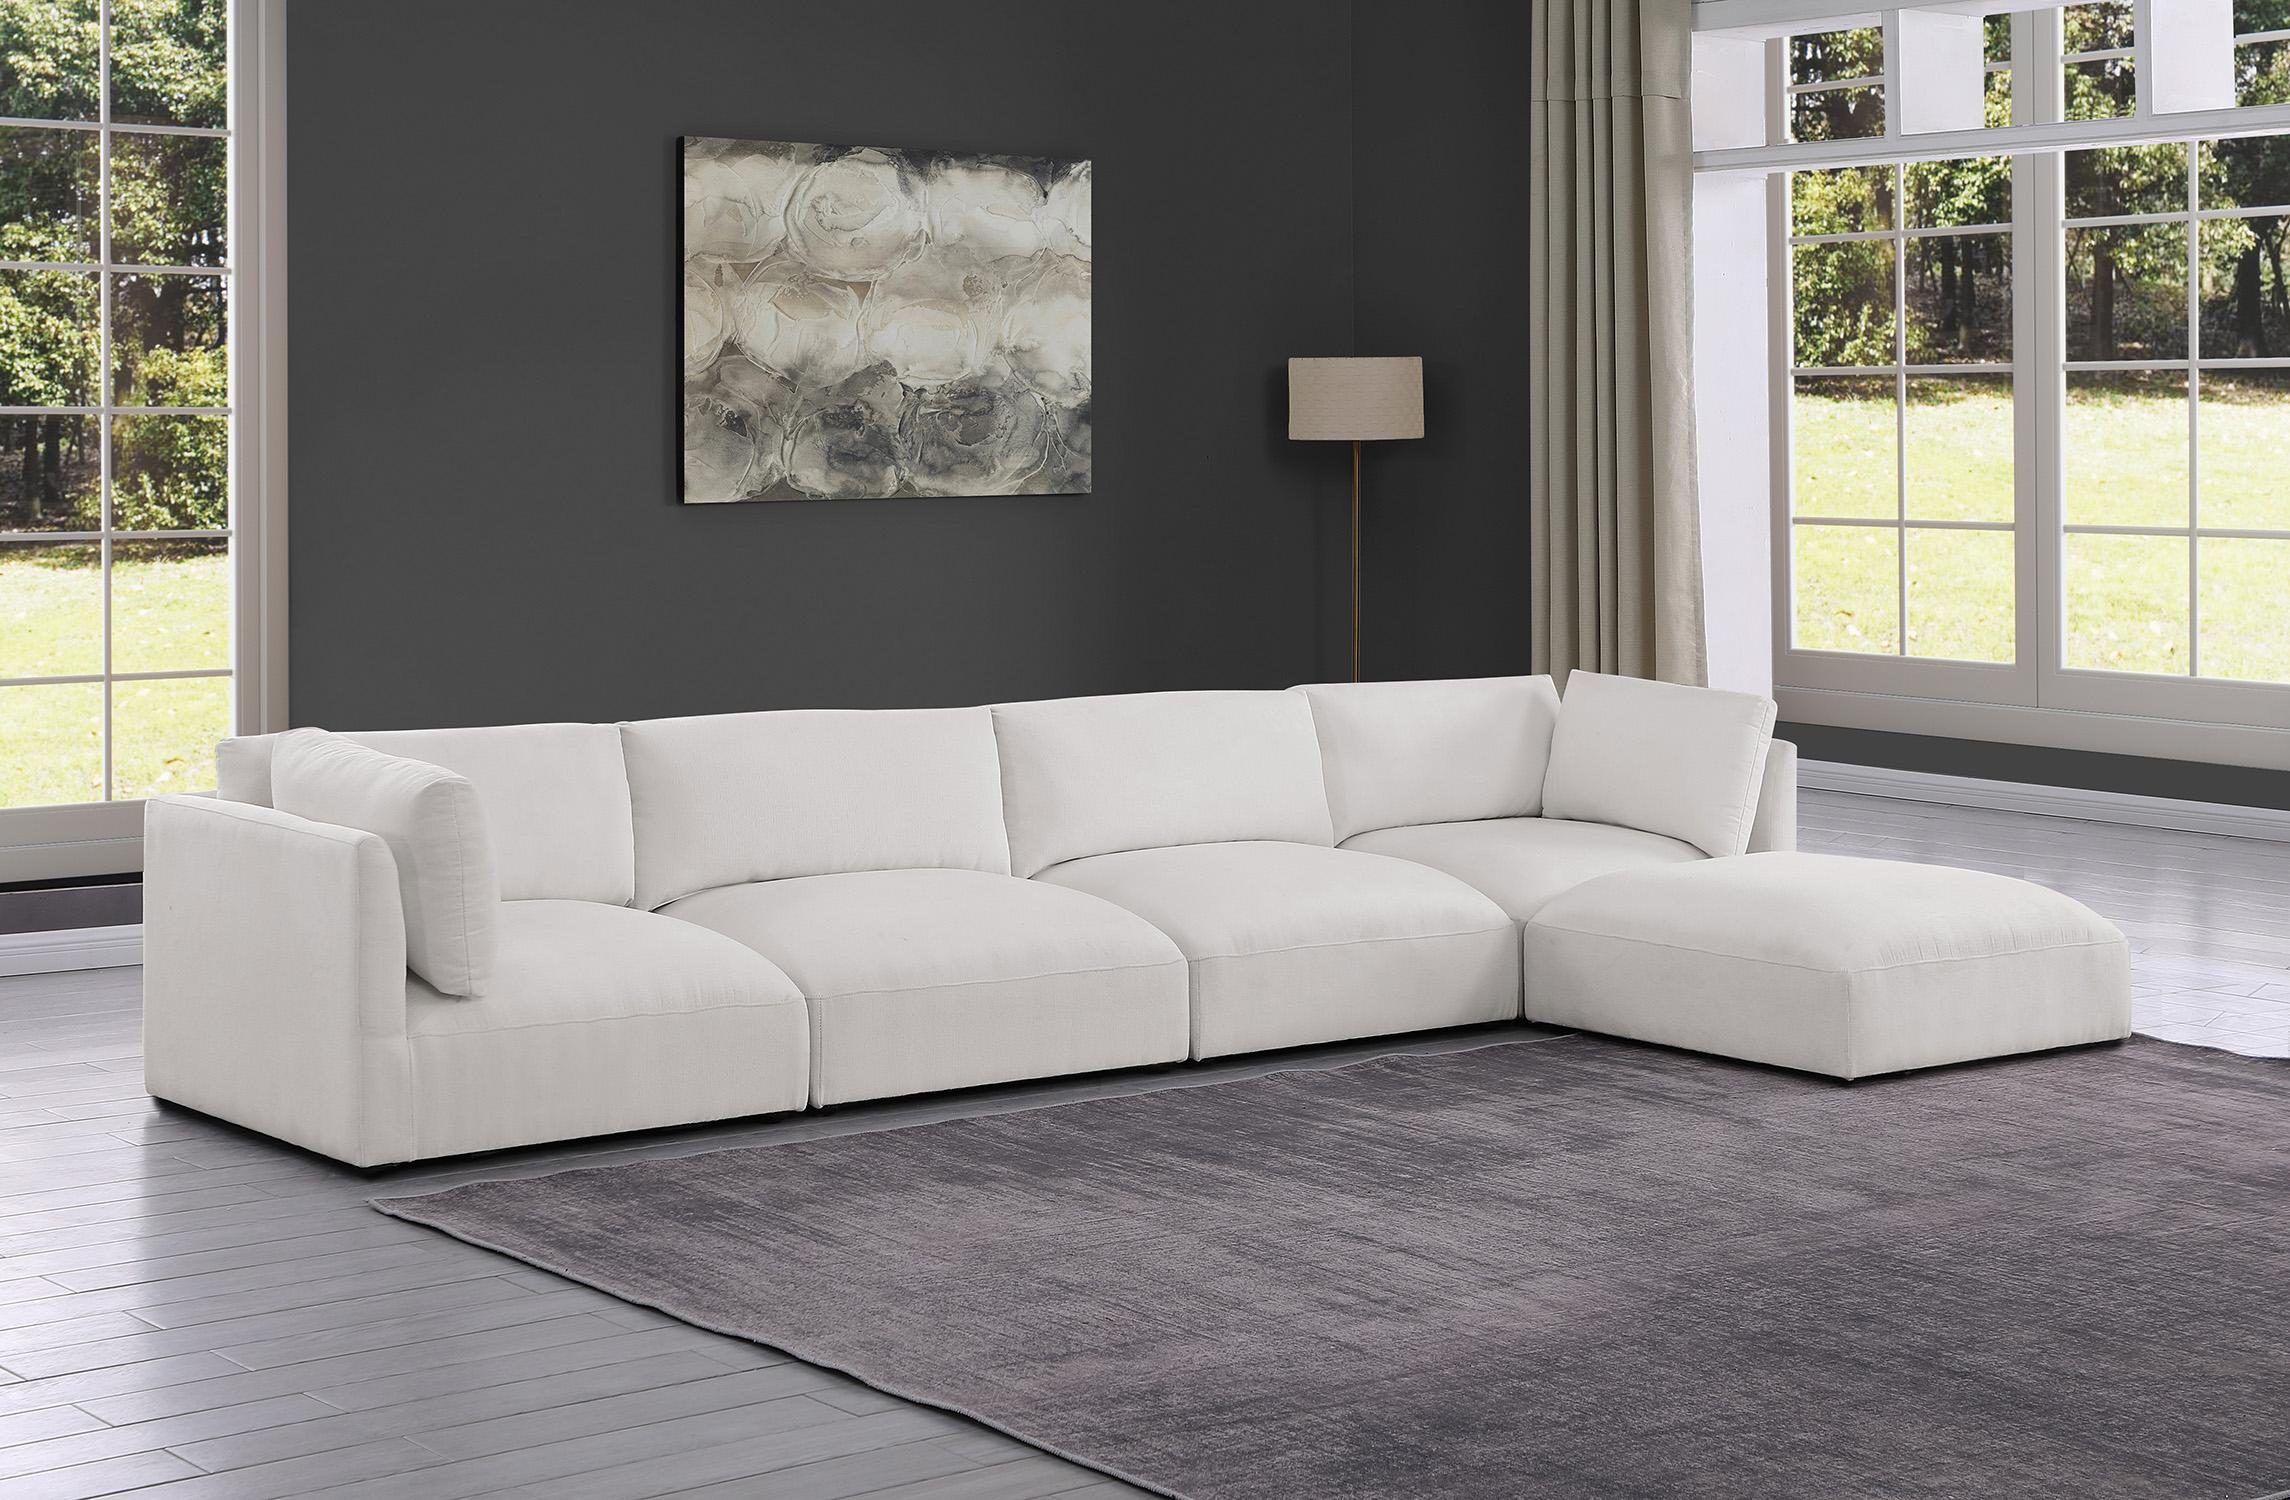 

    
Meridian Furniture EASE 696Cream-Sec5A Modular Sectional Sofa Cream 696Cream-Sec5A
